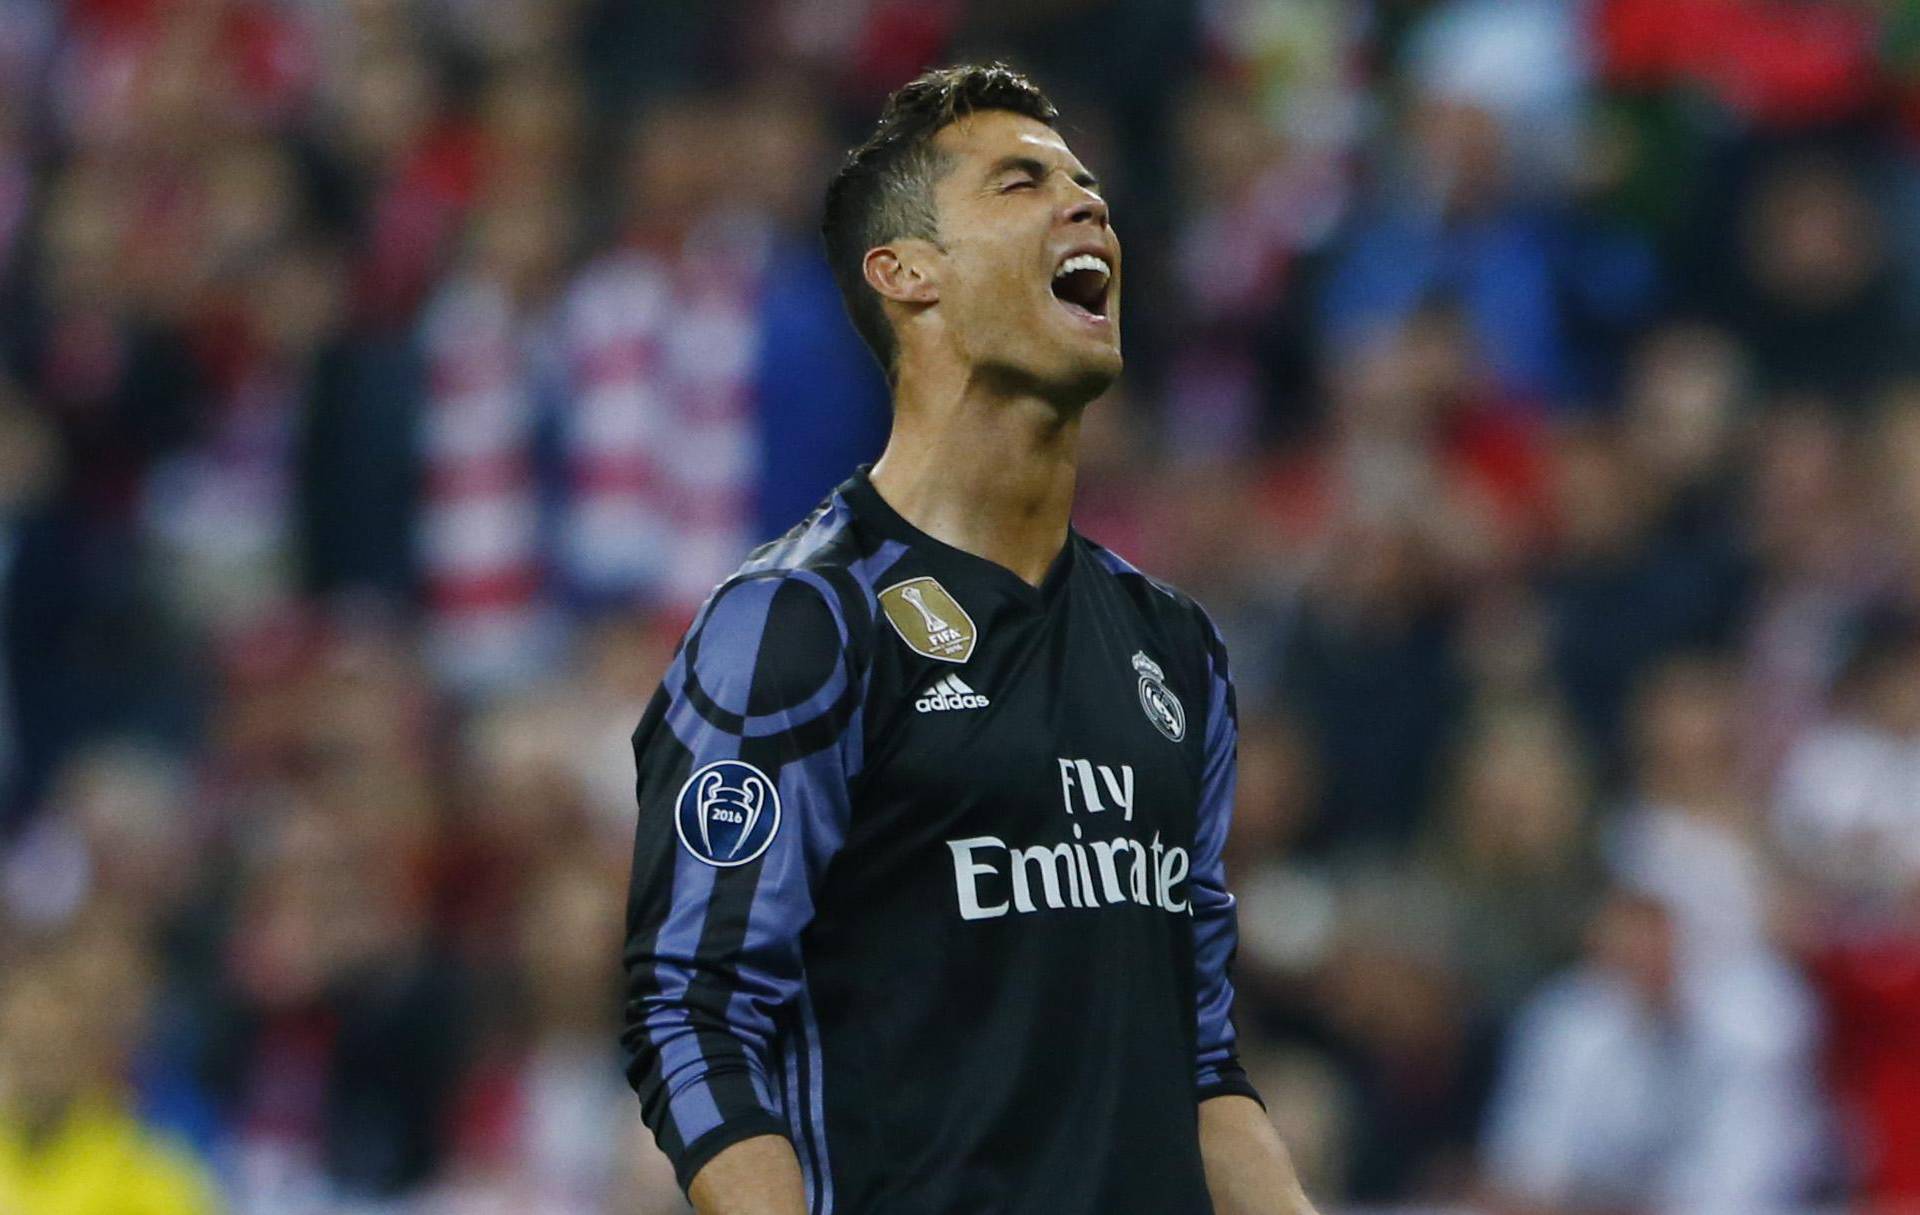 Real Madrid's Cristiano Ronaldo looks dejected